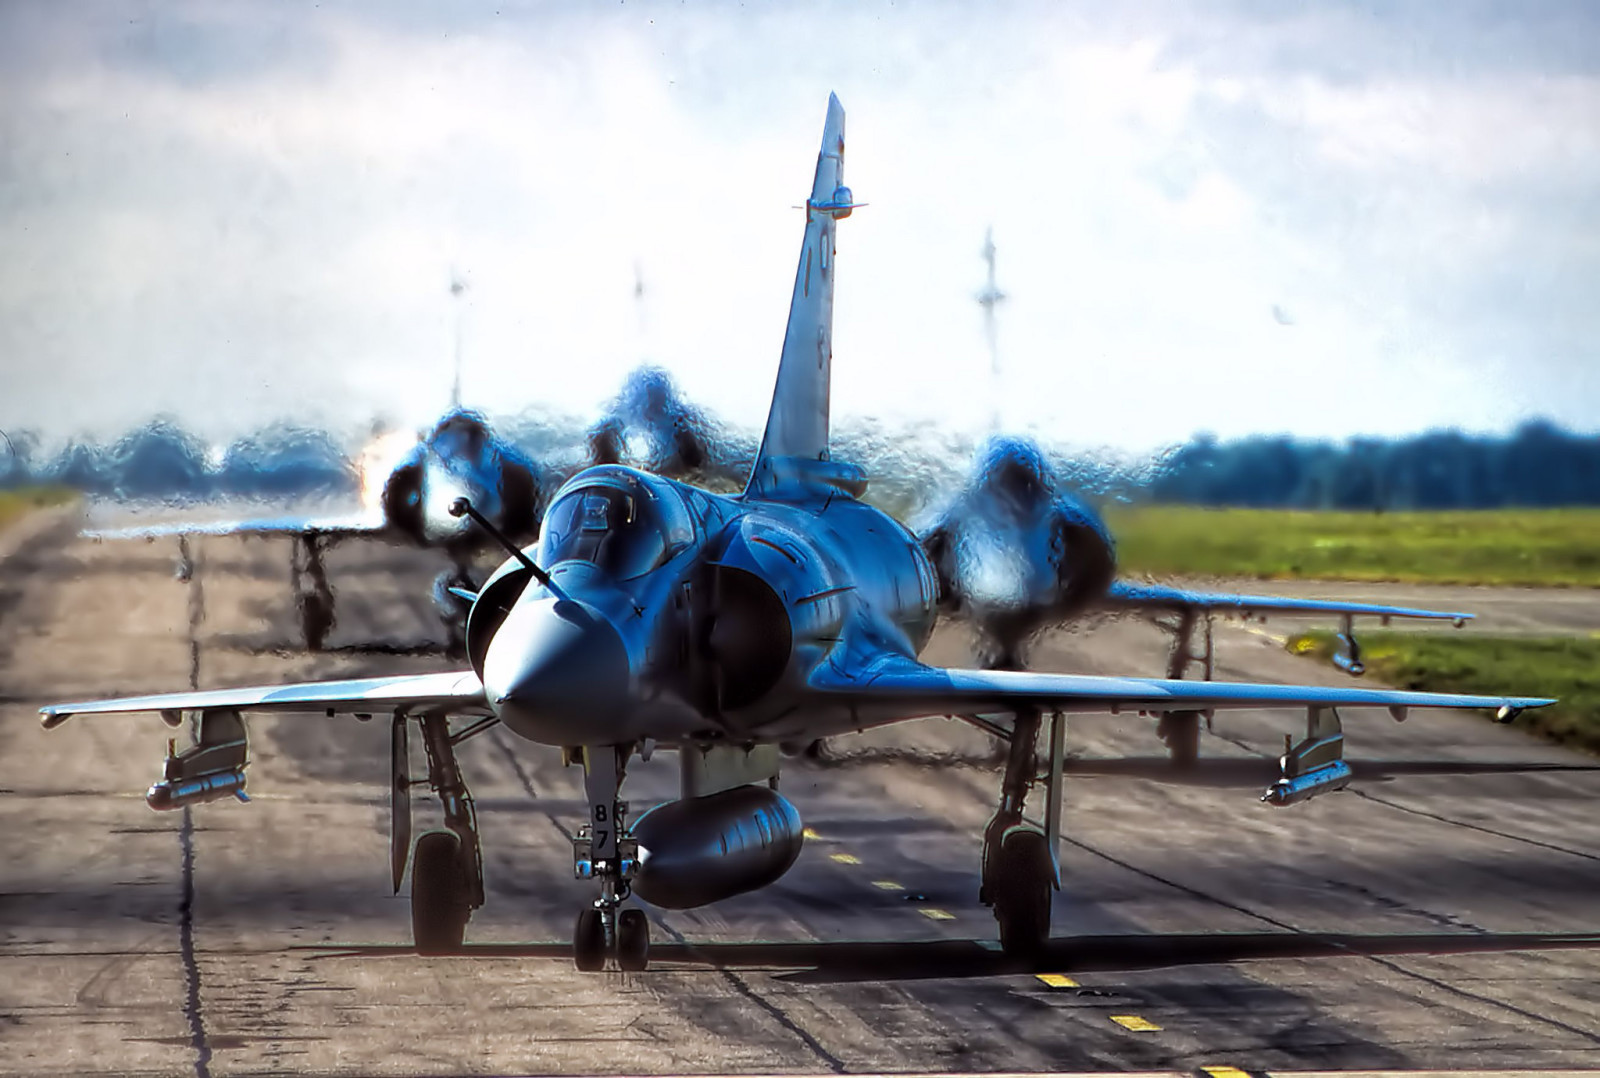 Pejuang, Mirage 2000, lapangan terbang, Serba guna, Dassault